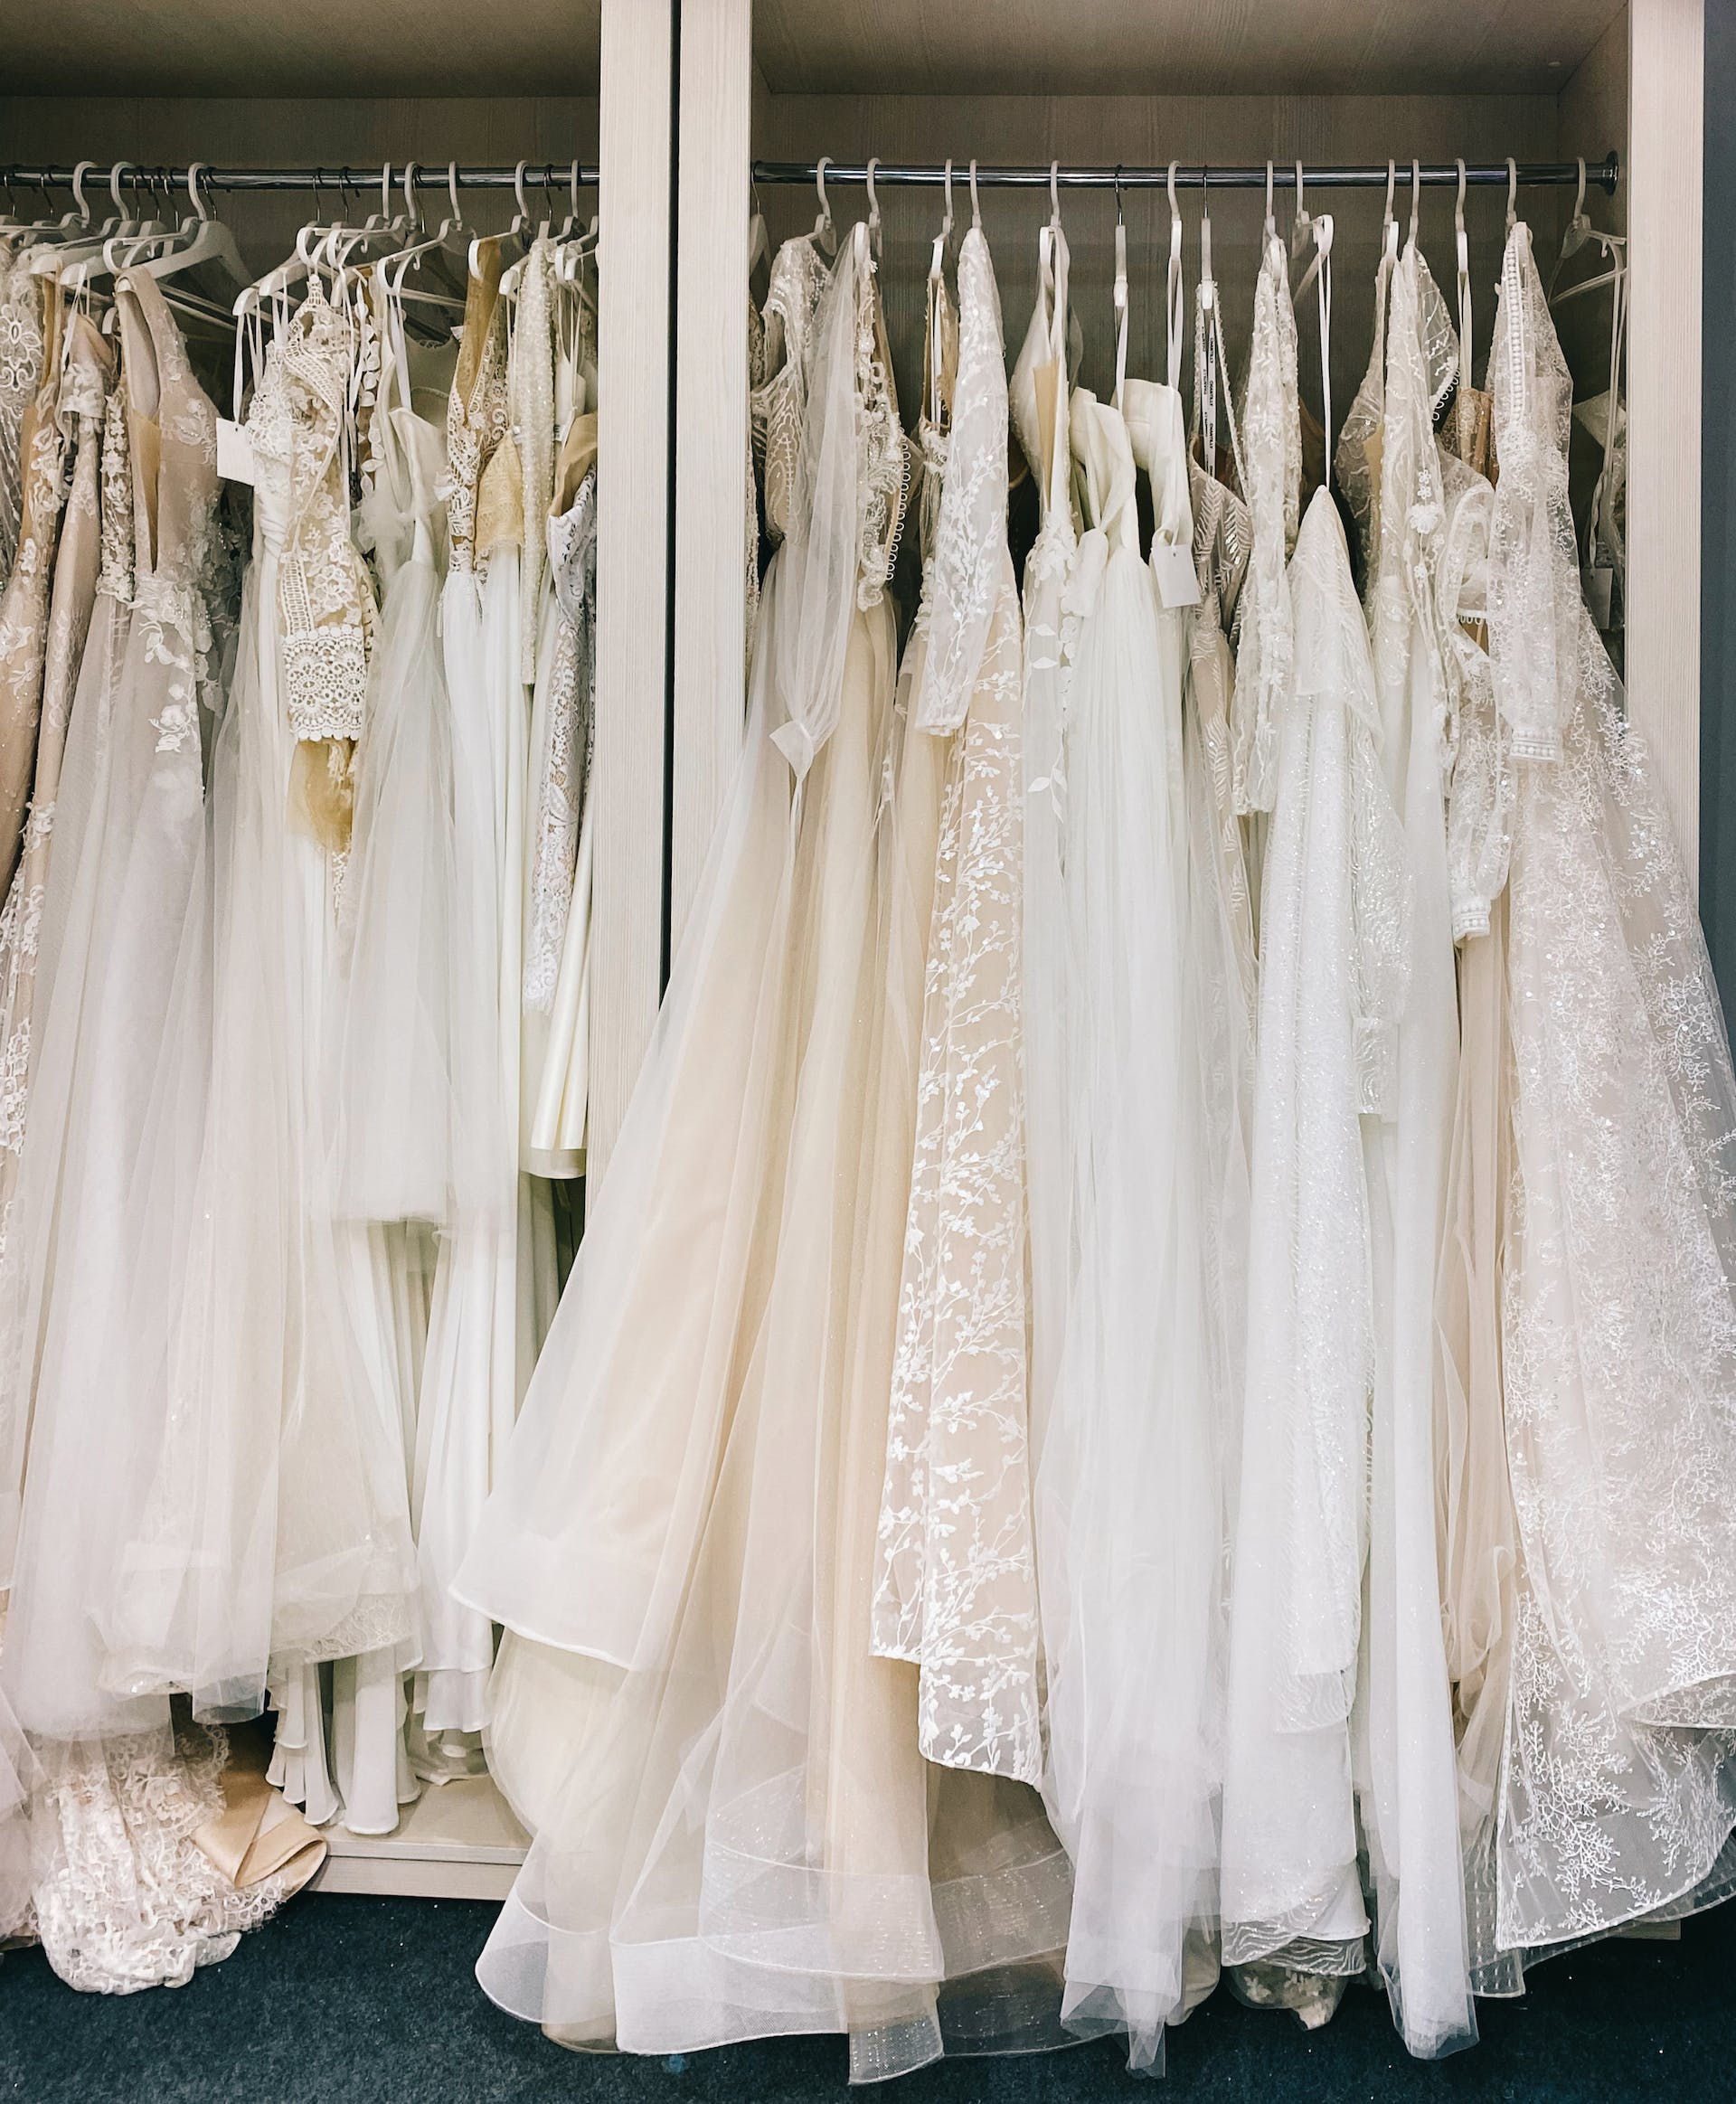 Wedding dresses hanging in a shop | Source: Pexels